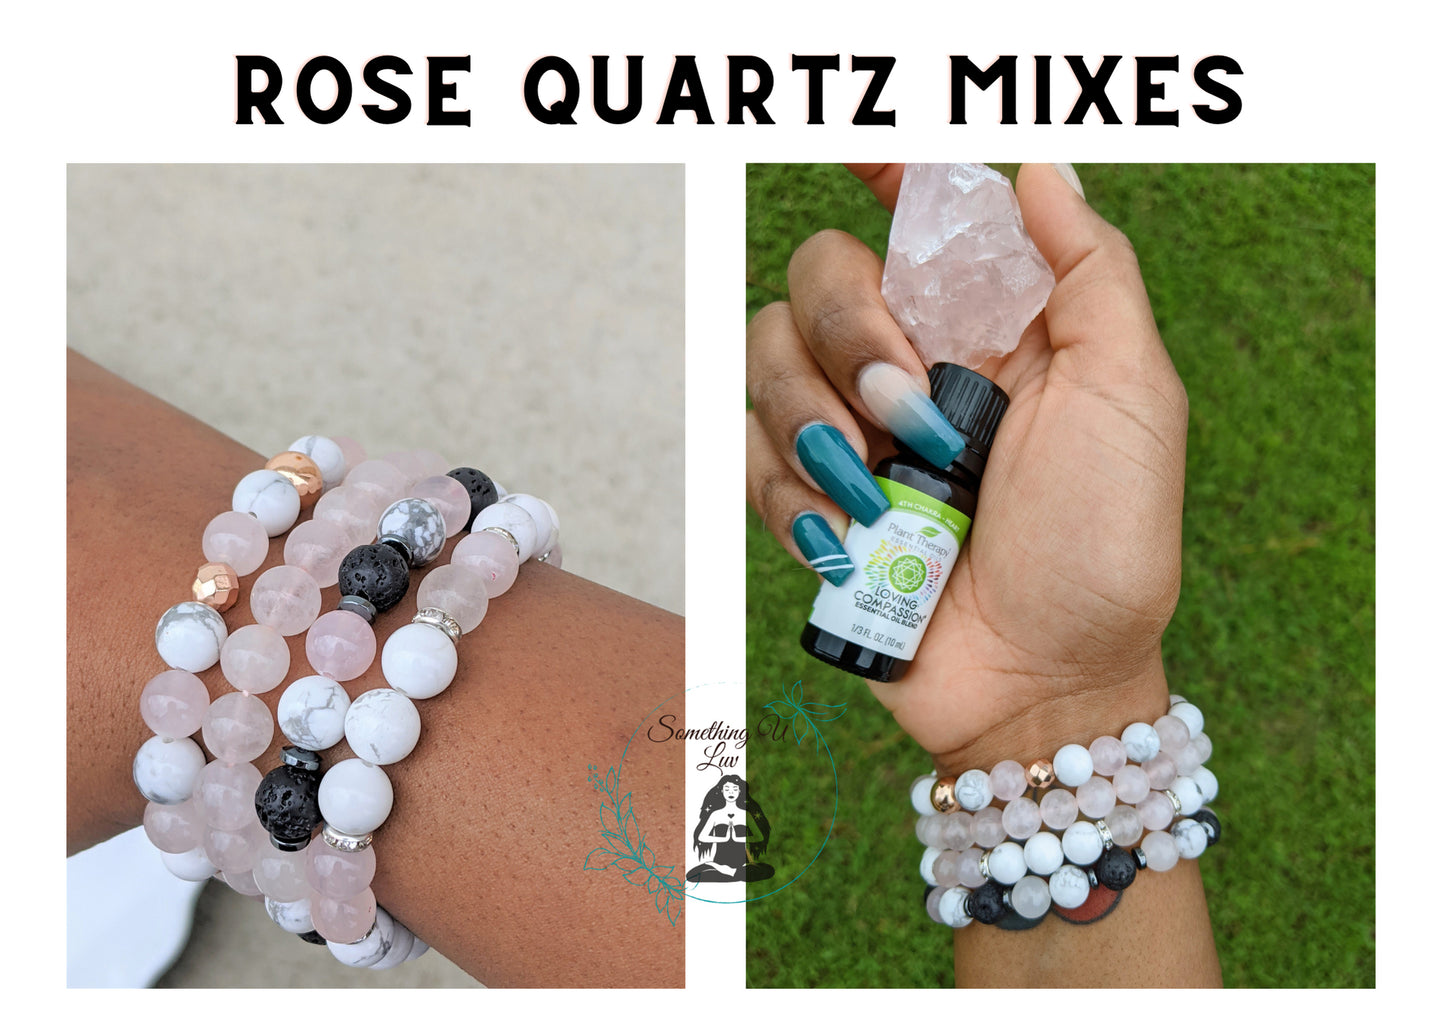 Self-Love, Friendship, & Patience Rose Quartz Crystal Healing Bracelet | Something U Luv